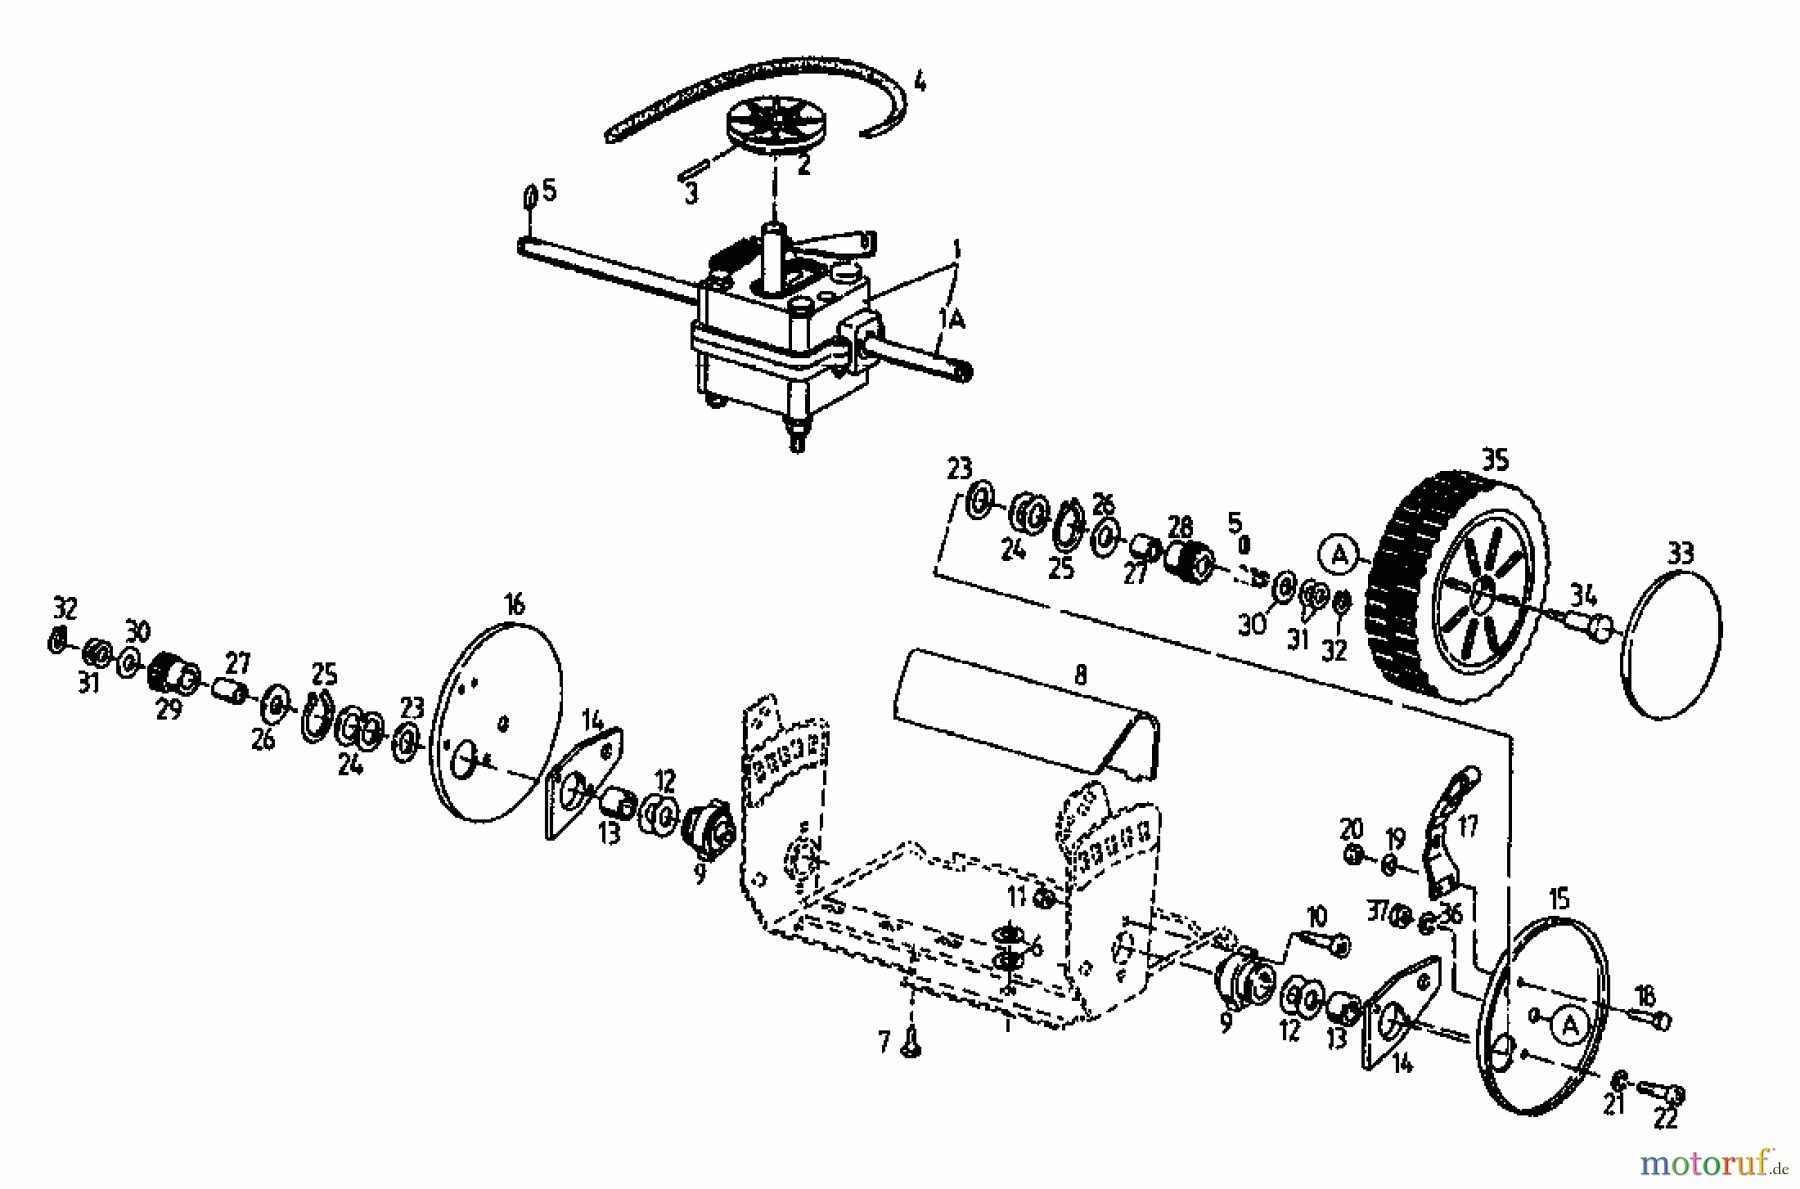  Floraself Petrol mower self propelled 3746 BLRE 04033.07  (1996) Gearbox, Wheels, Cutting hight adjustment